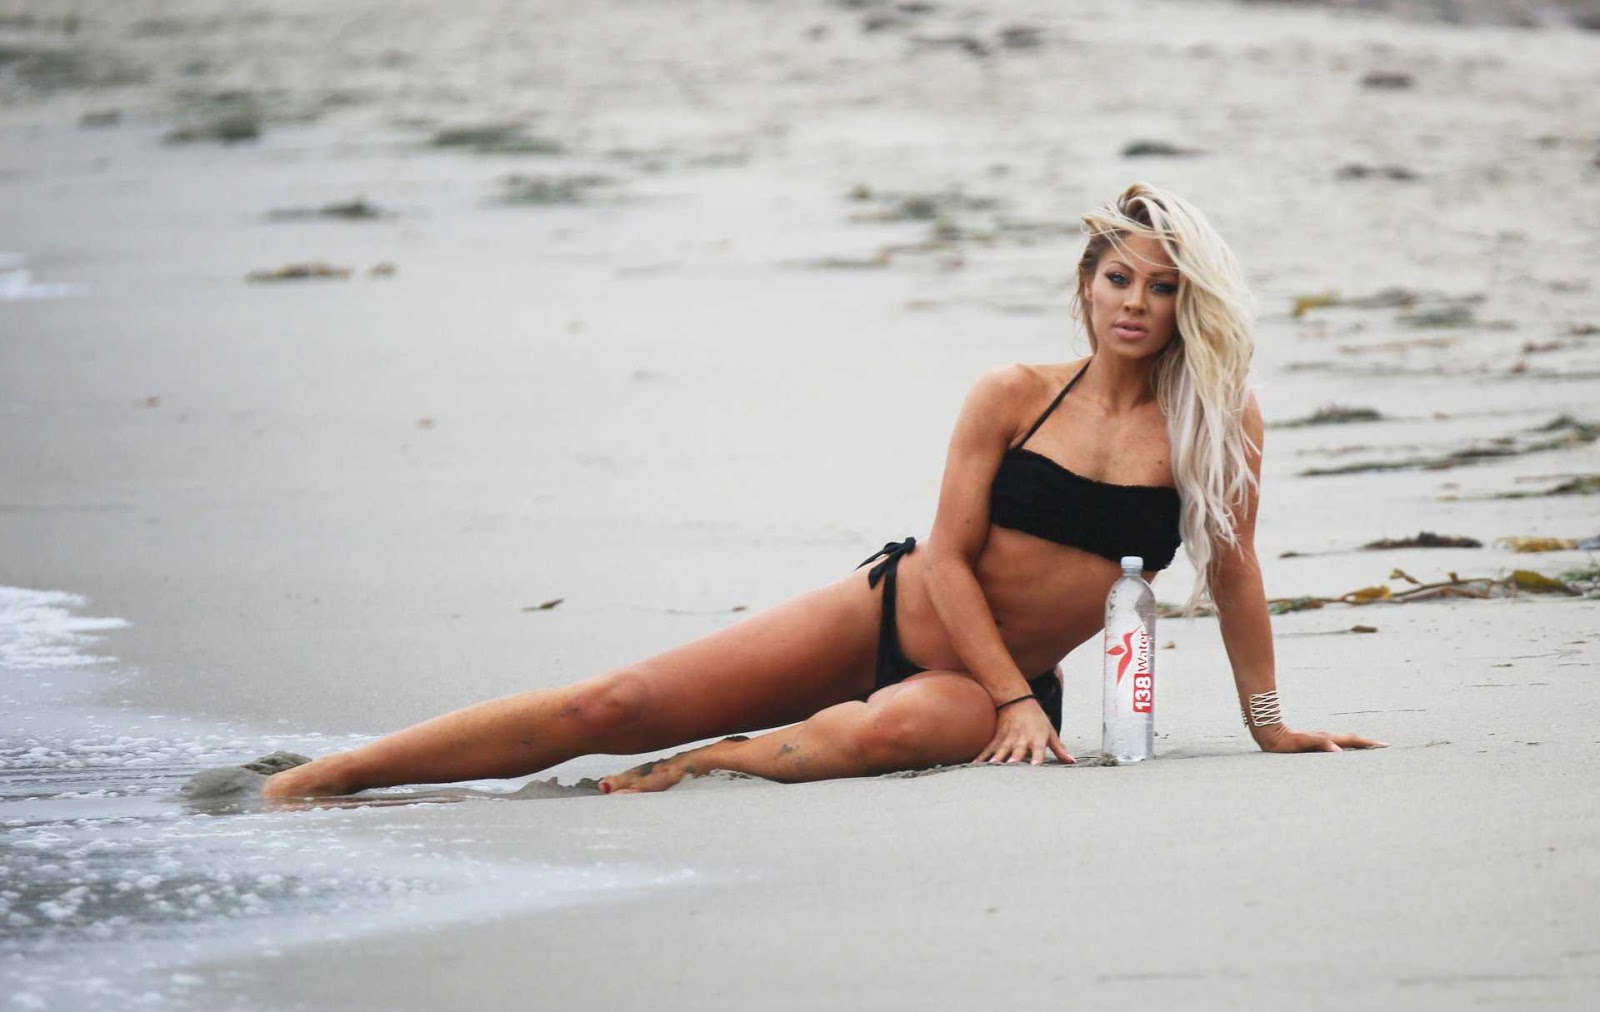 Alysia Kaempf for “138 Water” Bikini Photoshoot in Malibu